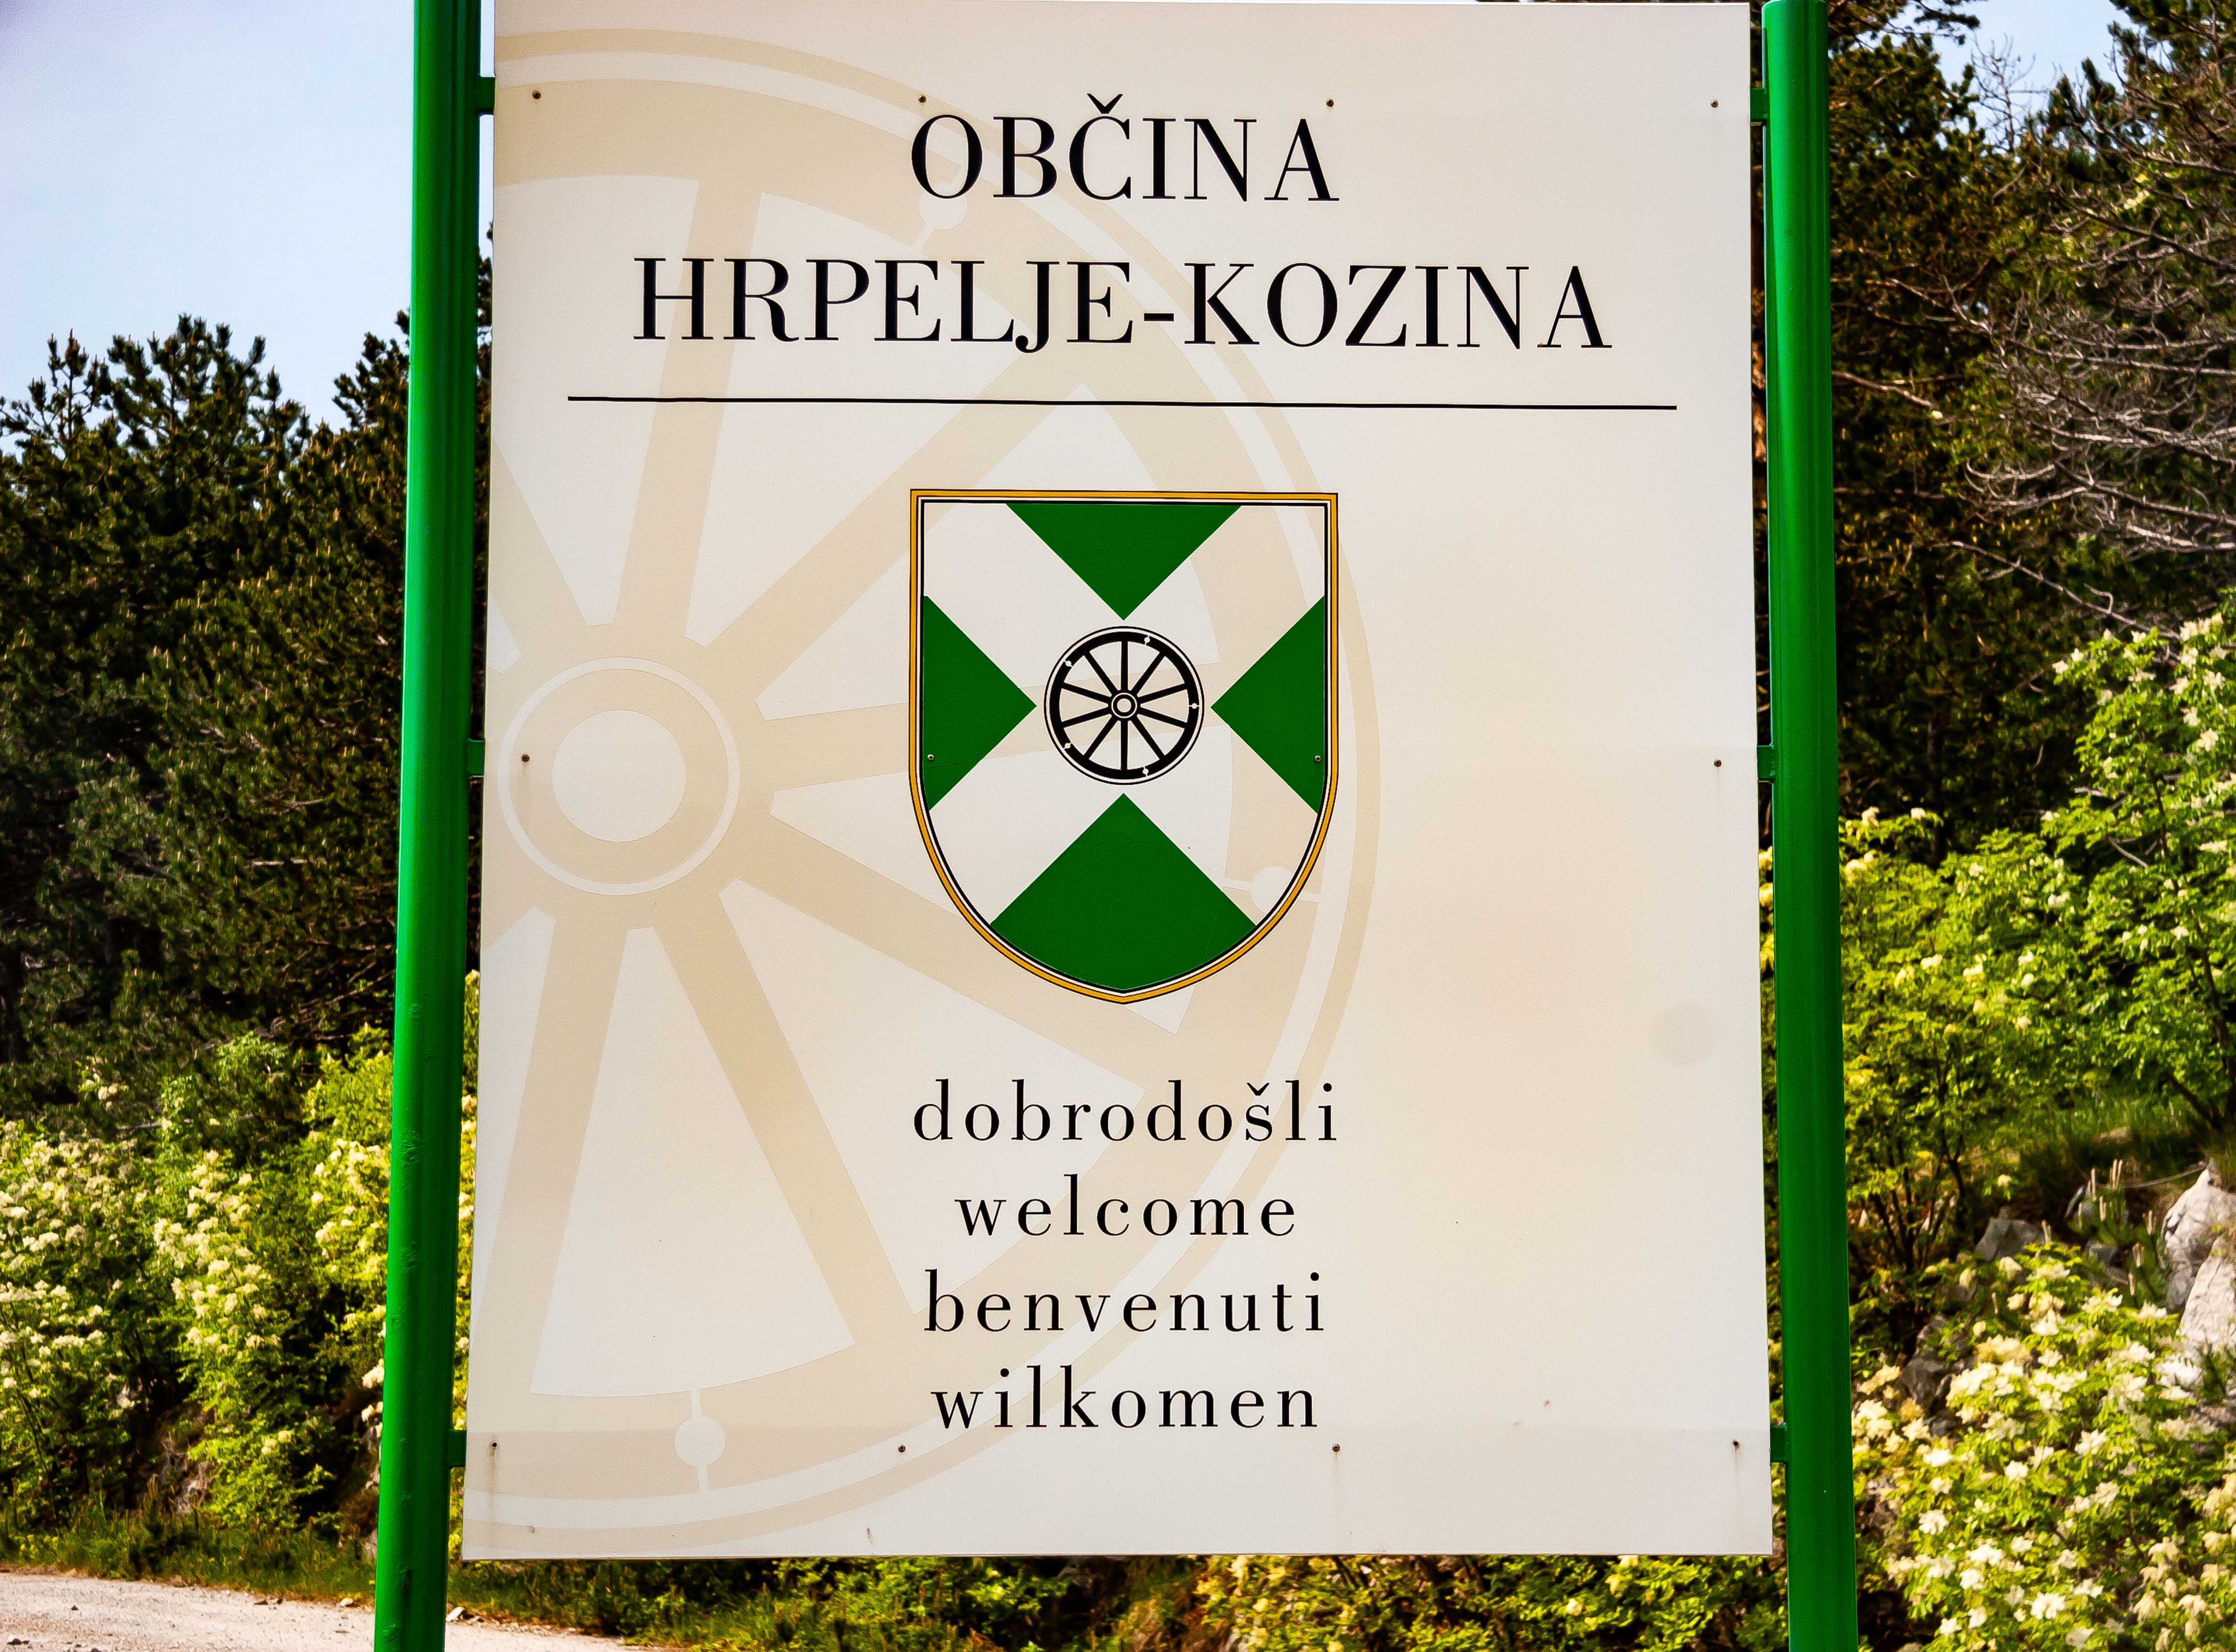 Slovenia, Hrpelje-Kozina Prov, Dobrodosli Hrpelje-Kozina Obcina, 2006, IMG 6925